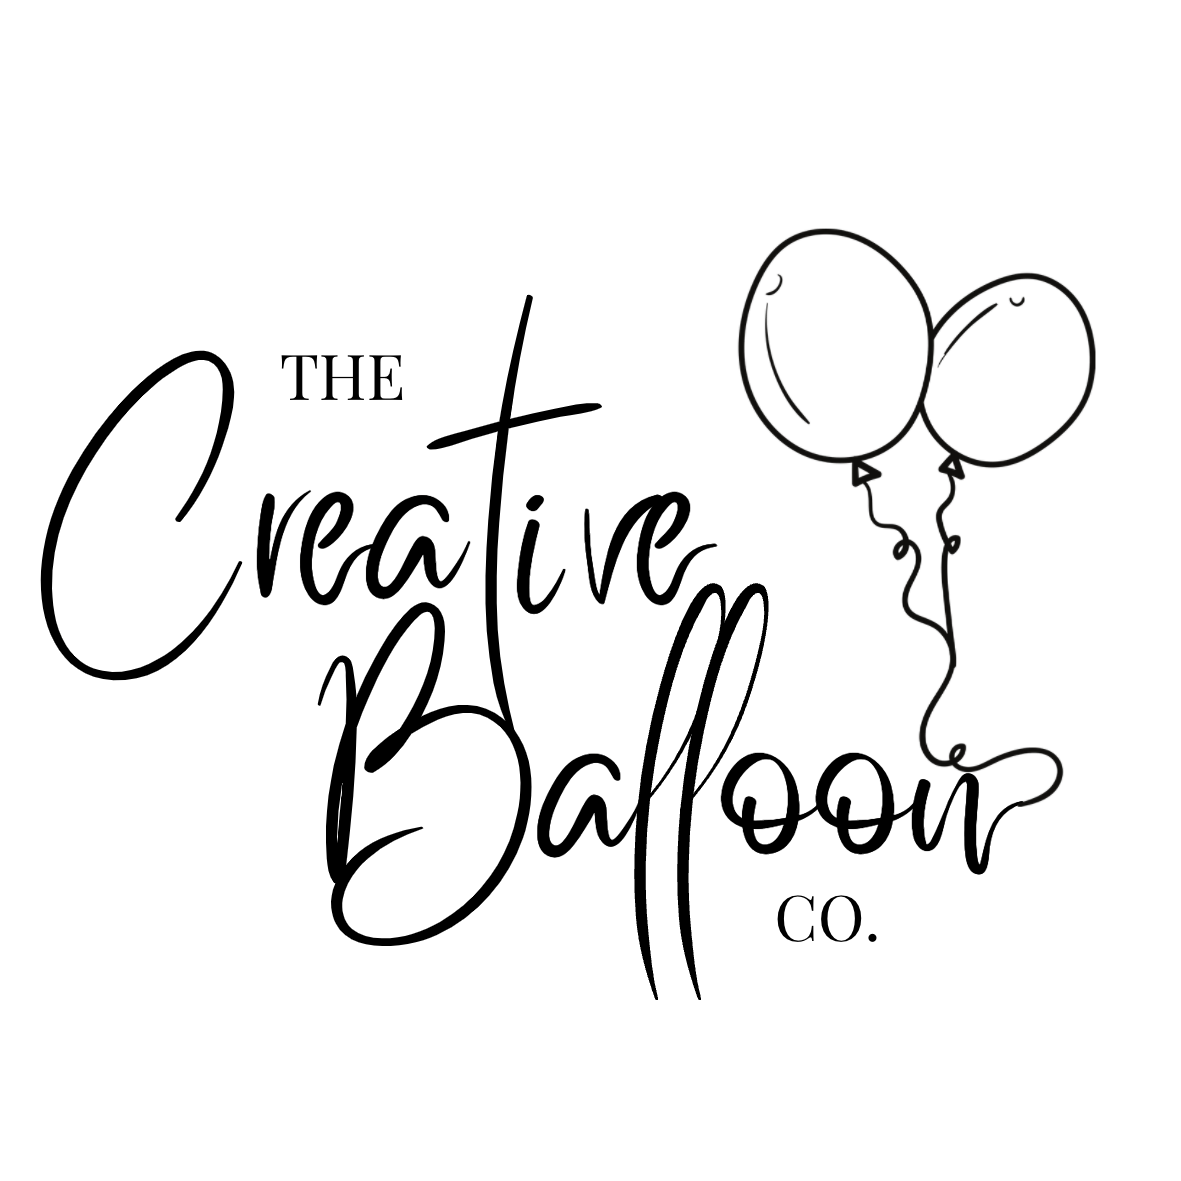 The Creative Balloon Company